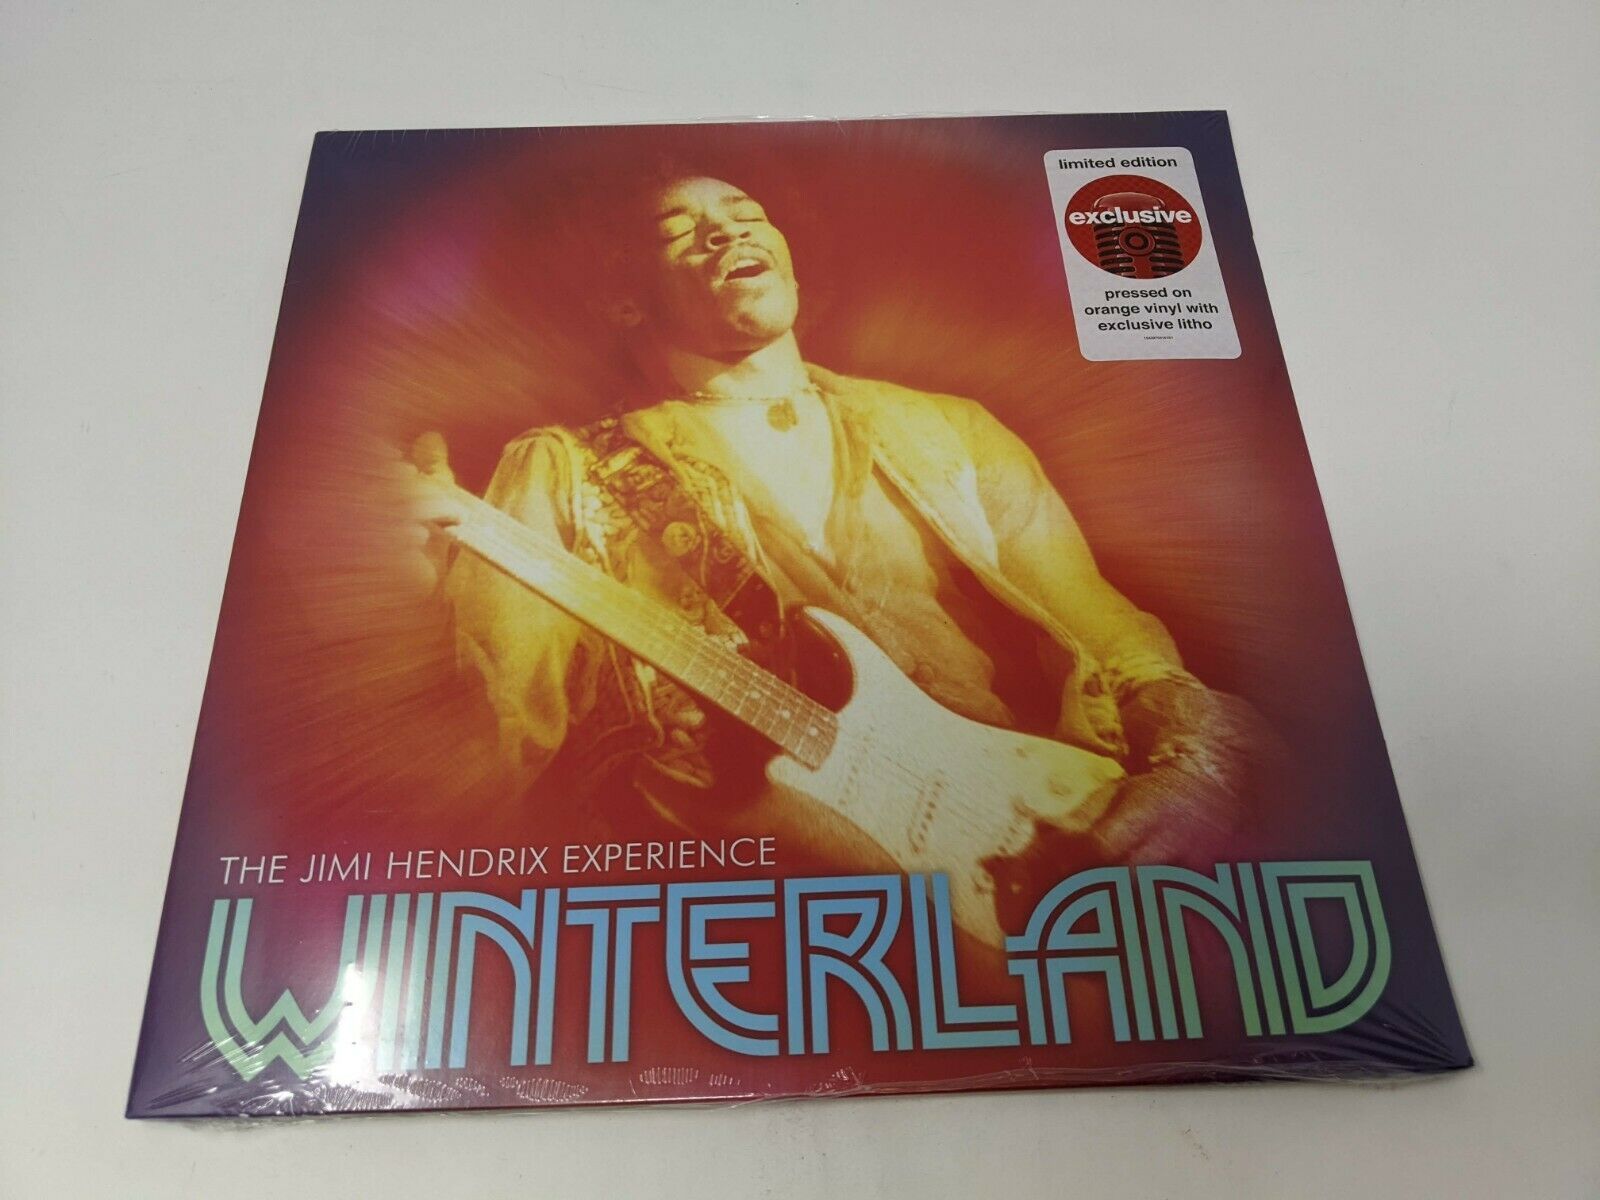 The Jimi Hendrix Experience: Winterland LP (Orange Vinyl with Exclusive Litho)